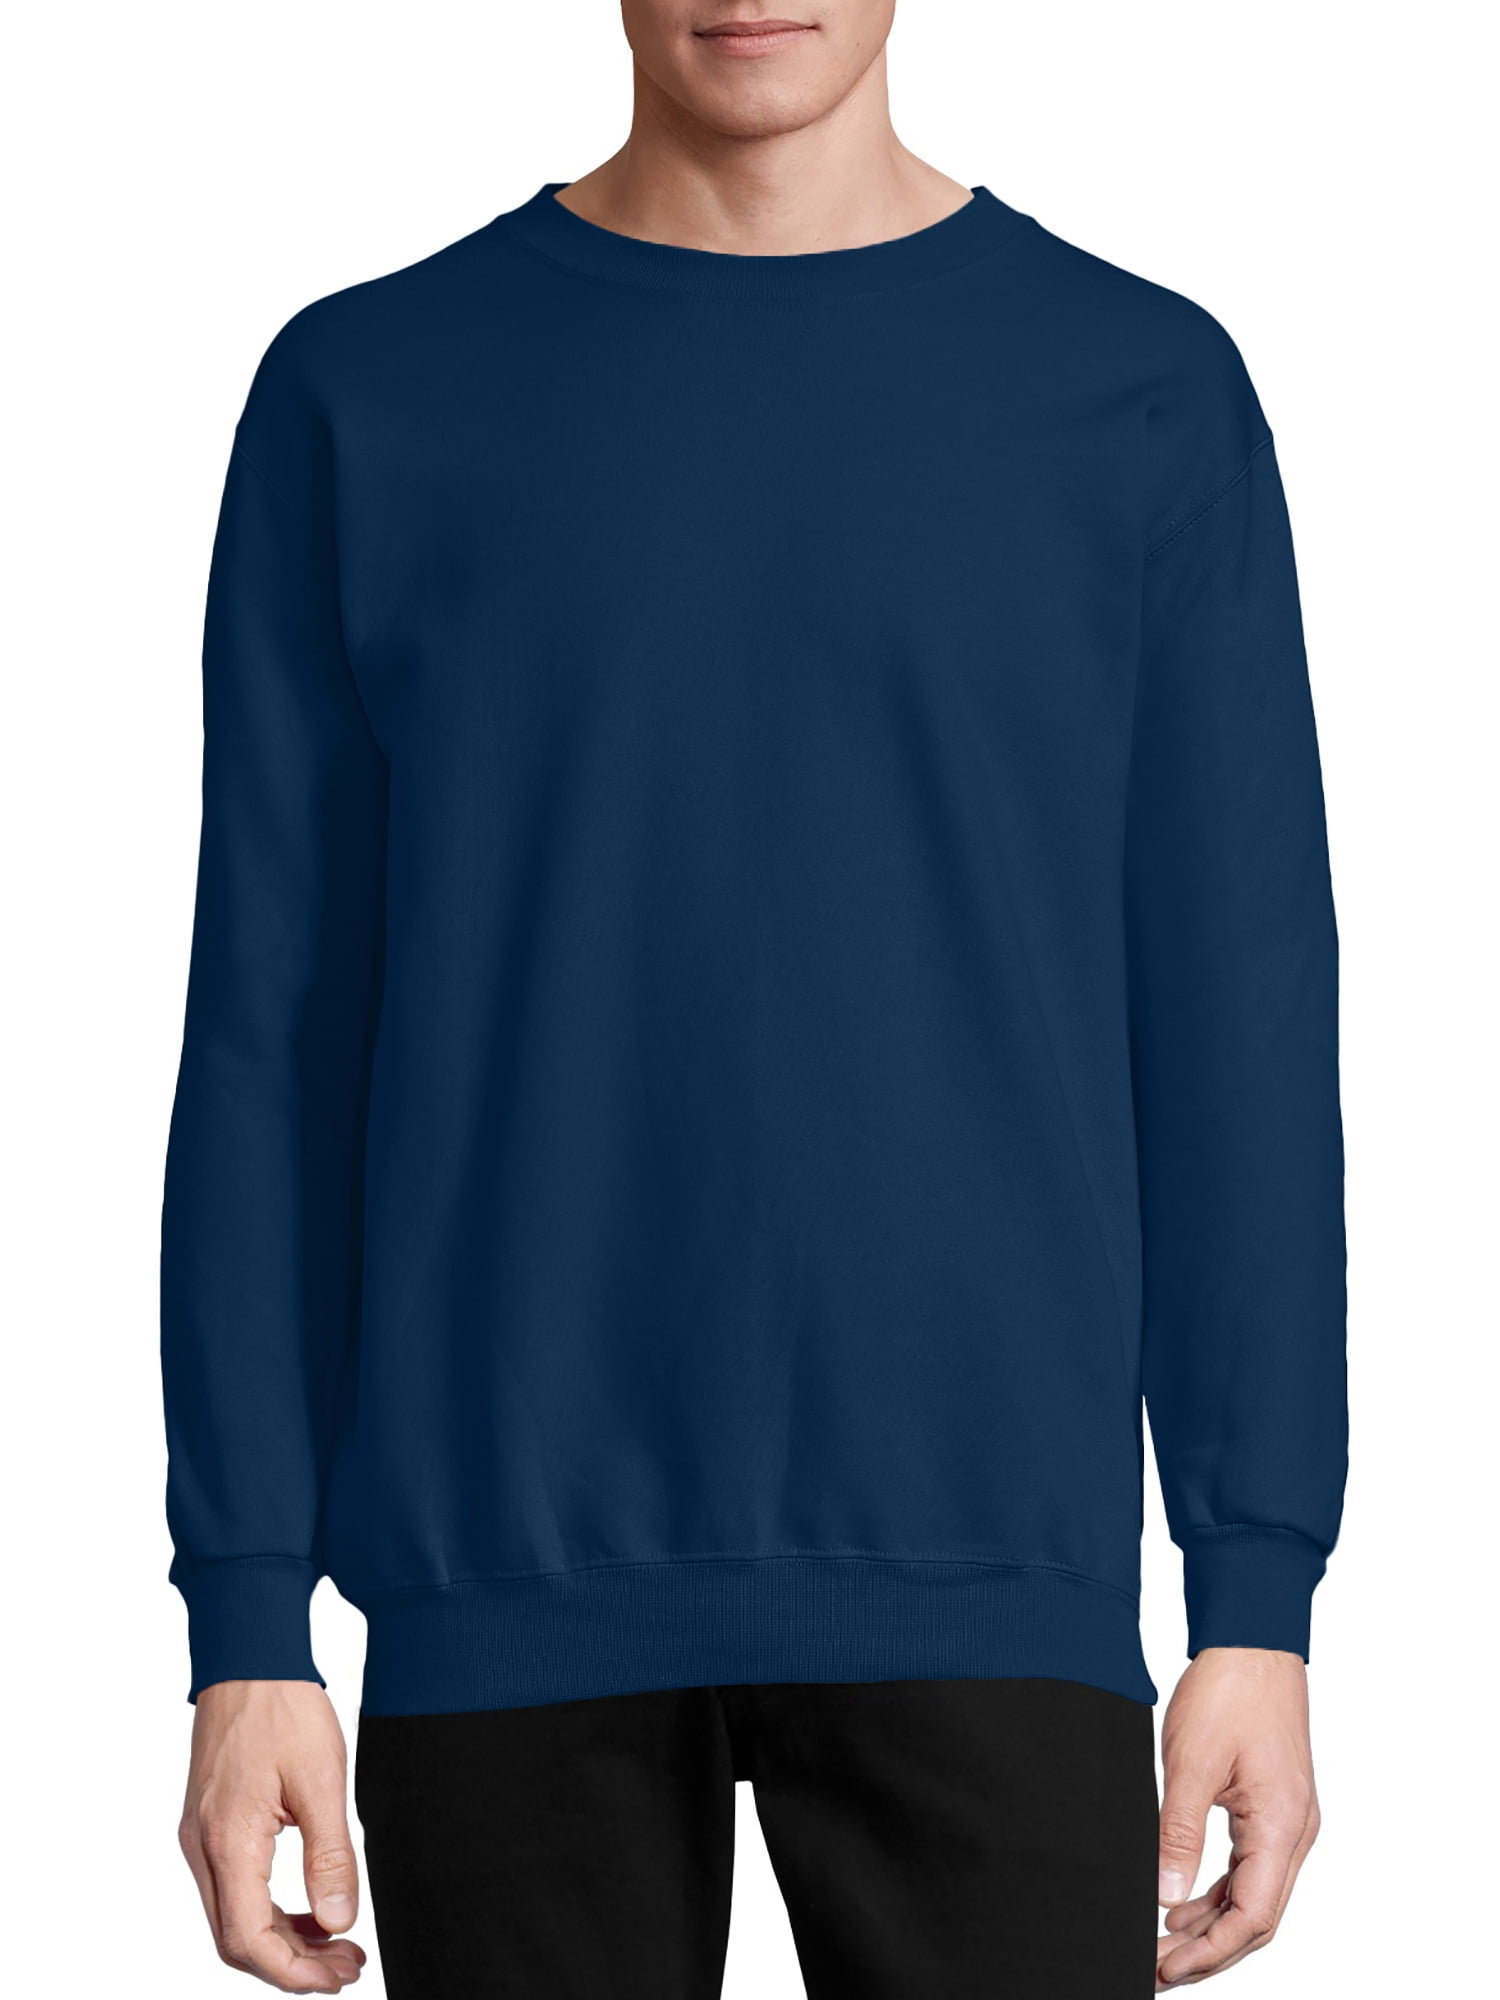 Brand New Men's Hanes Ecosmart Crewneck Premium Fleece Smoke Gray Sweatshirt L 